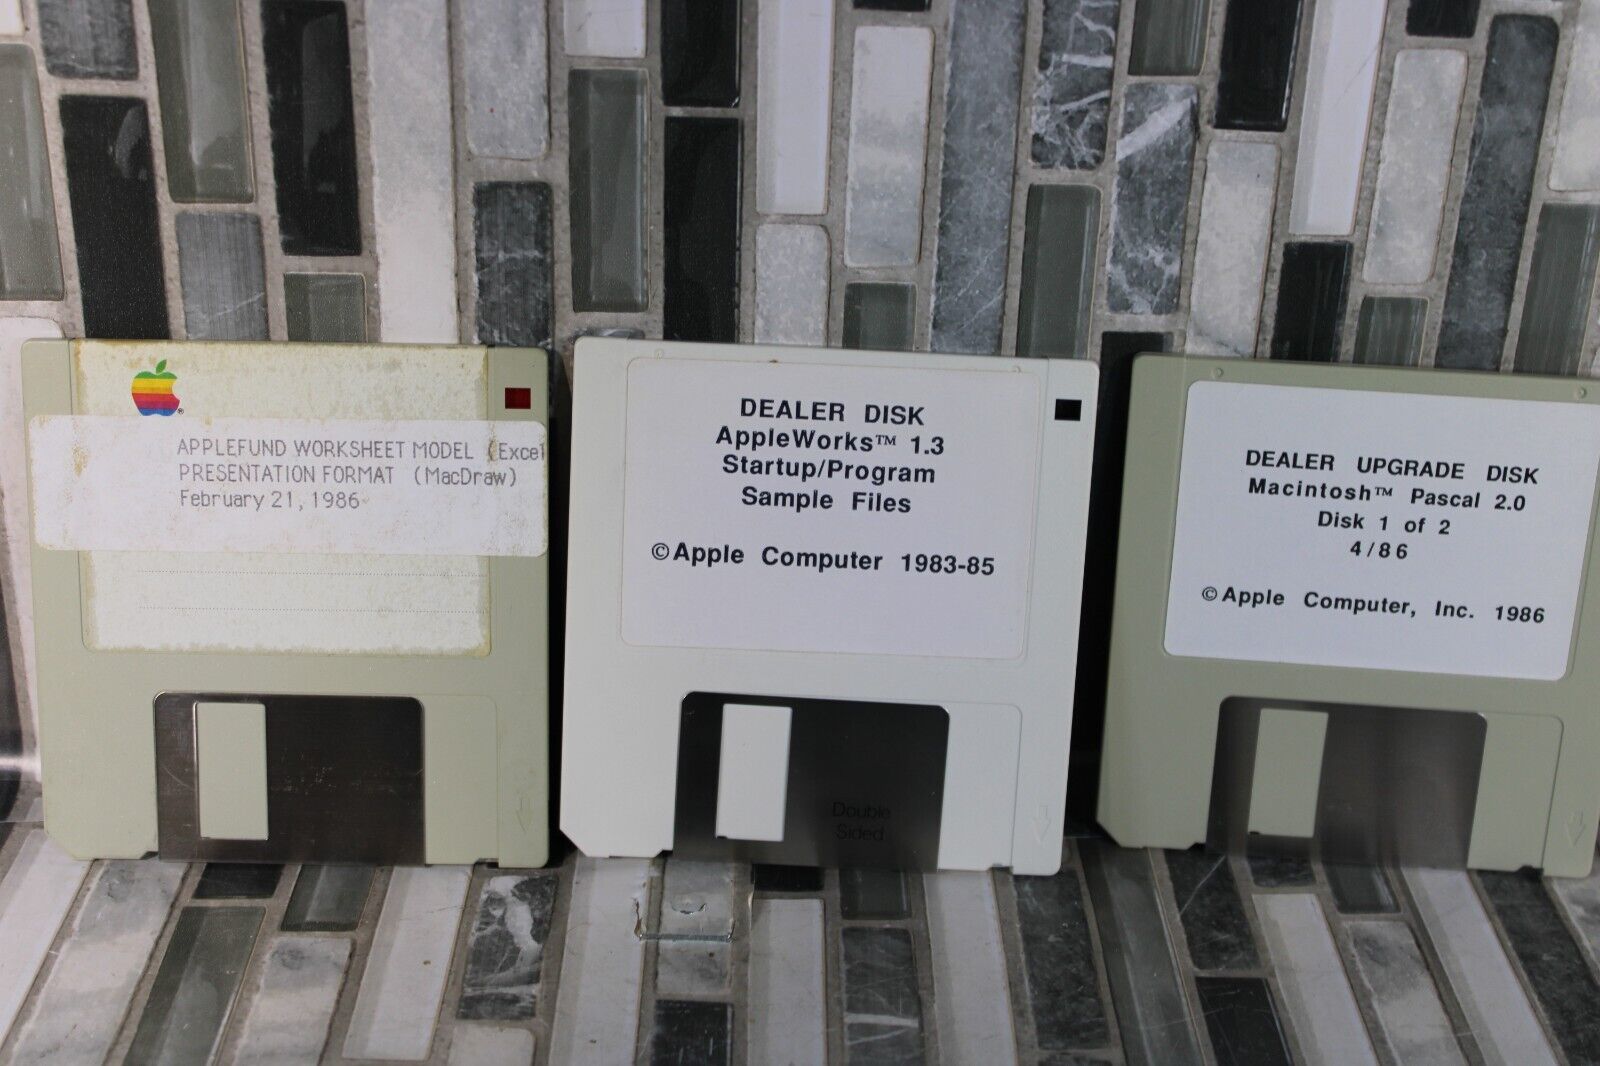 3 Vintage Apple Dealer Employee Floppy Disks from 1980s